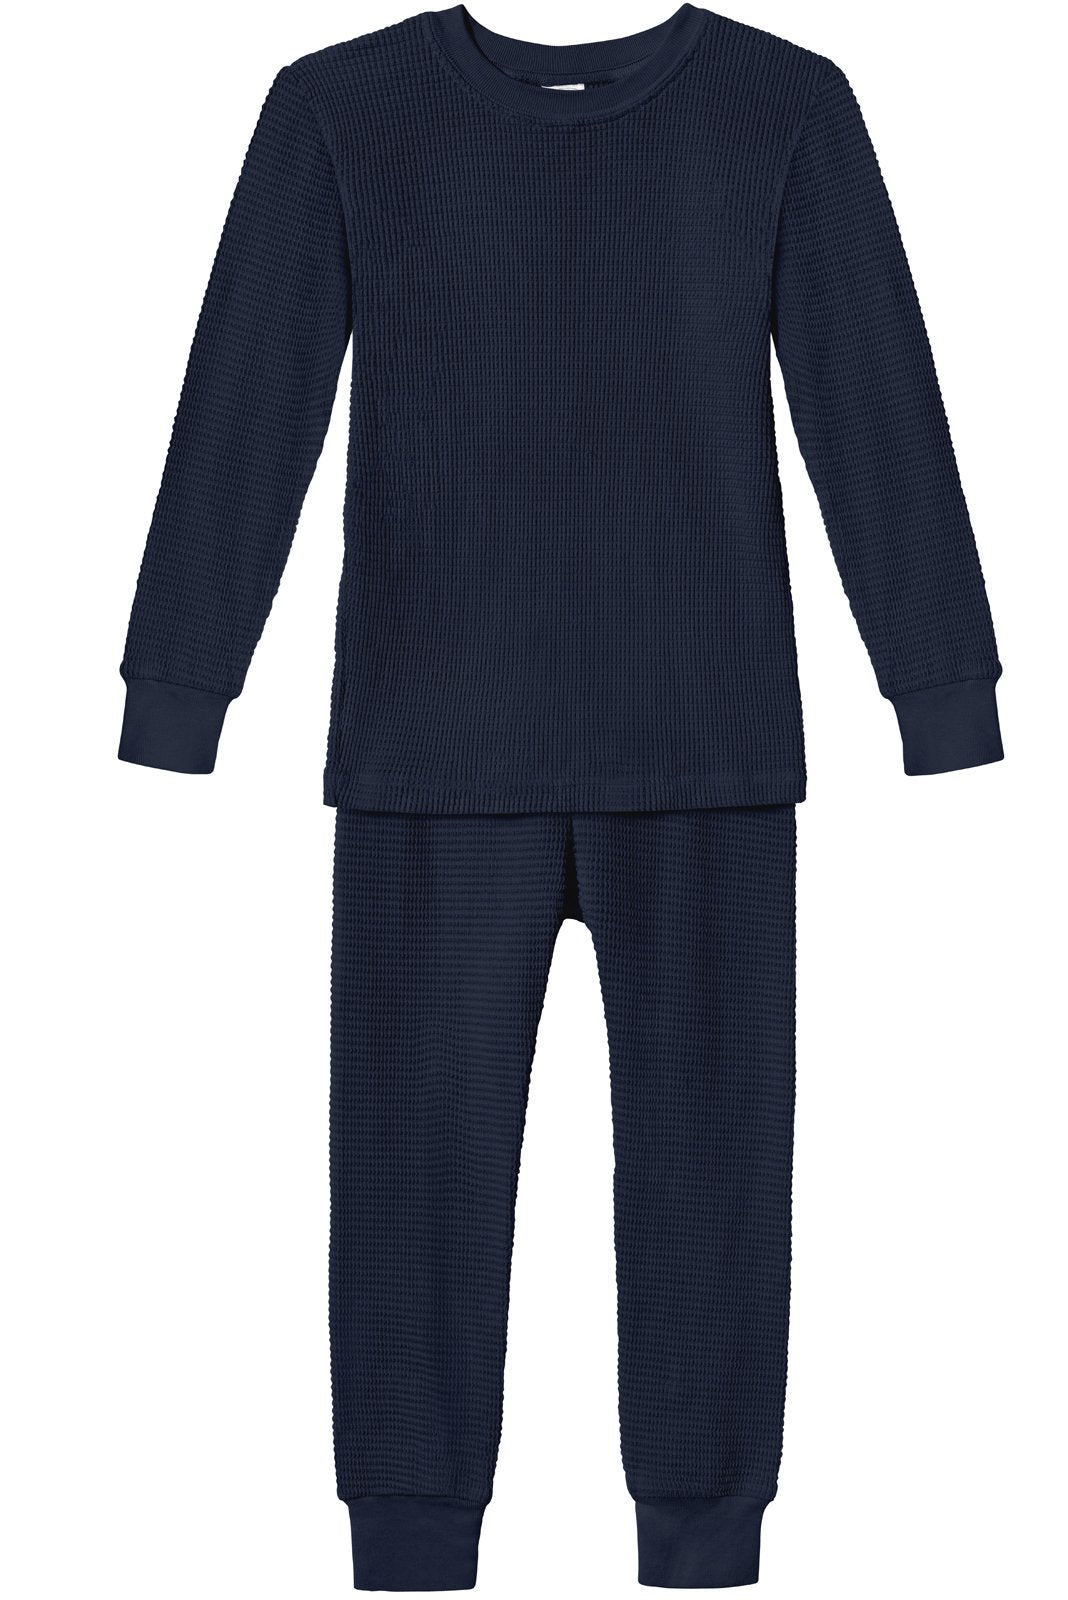 HEROBIKER Thermal Underwear Boys' Super Soft Wool Lined Children's Warm Long  John Top Bottom Warm Set (S-XL)Universal for boys and girls （Unisex  version） 